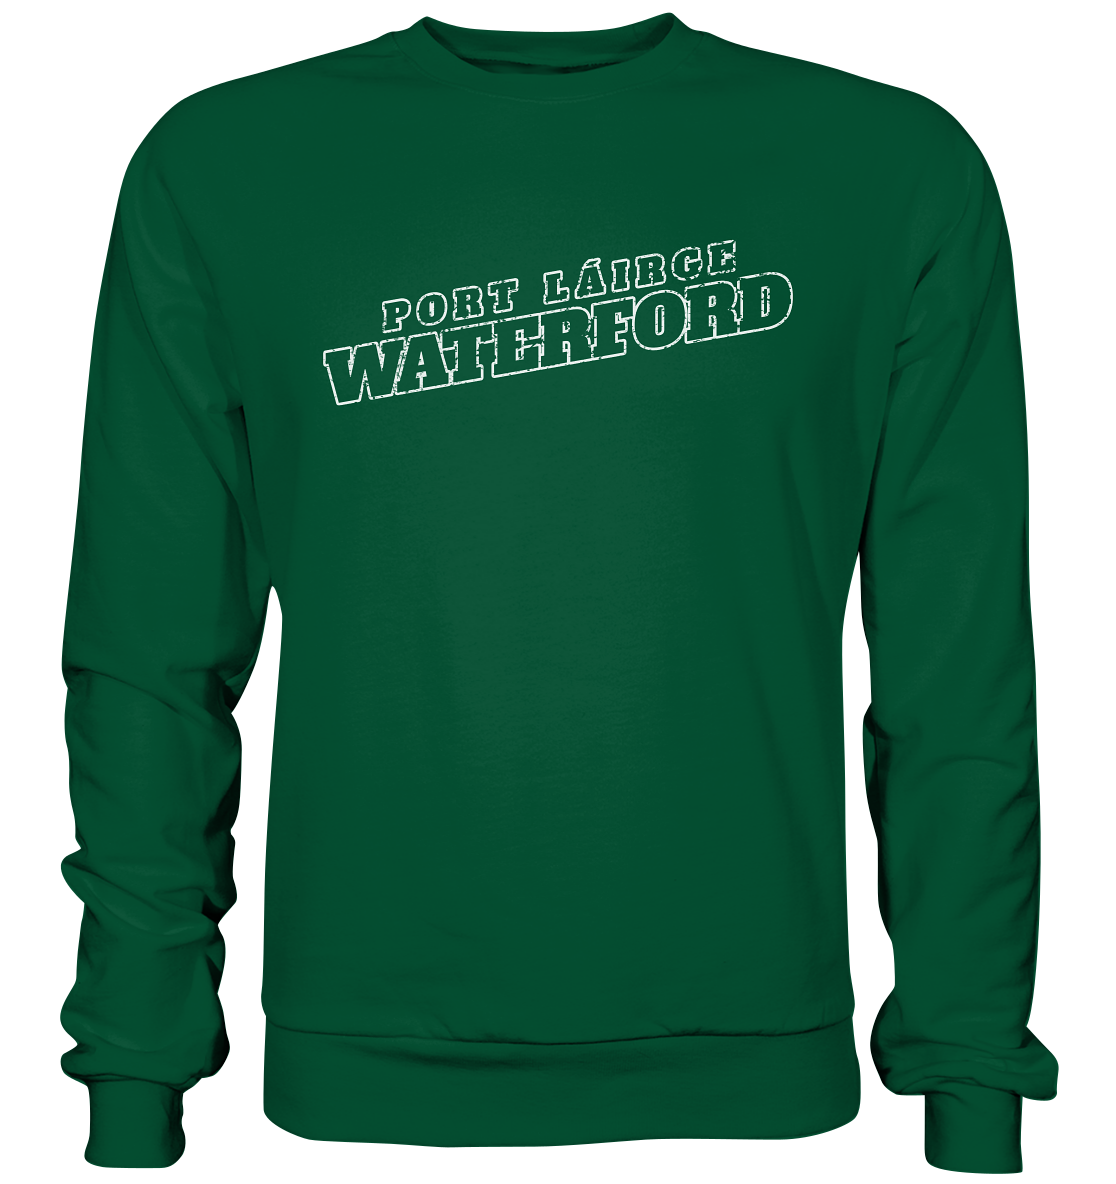 Cities Of Ireland "Waterford" - Basic Sweatshirt